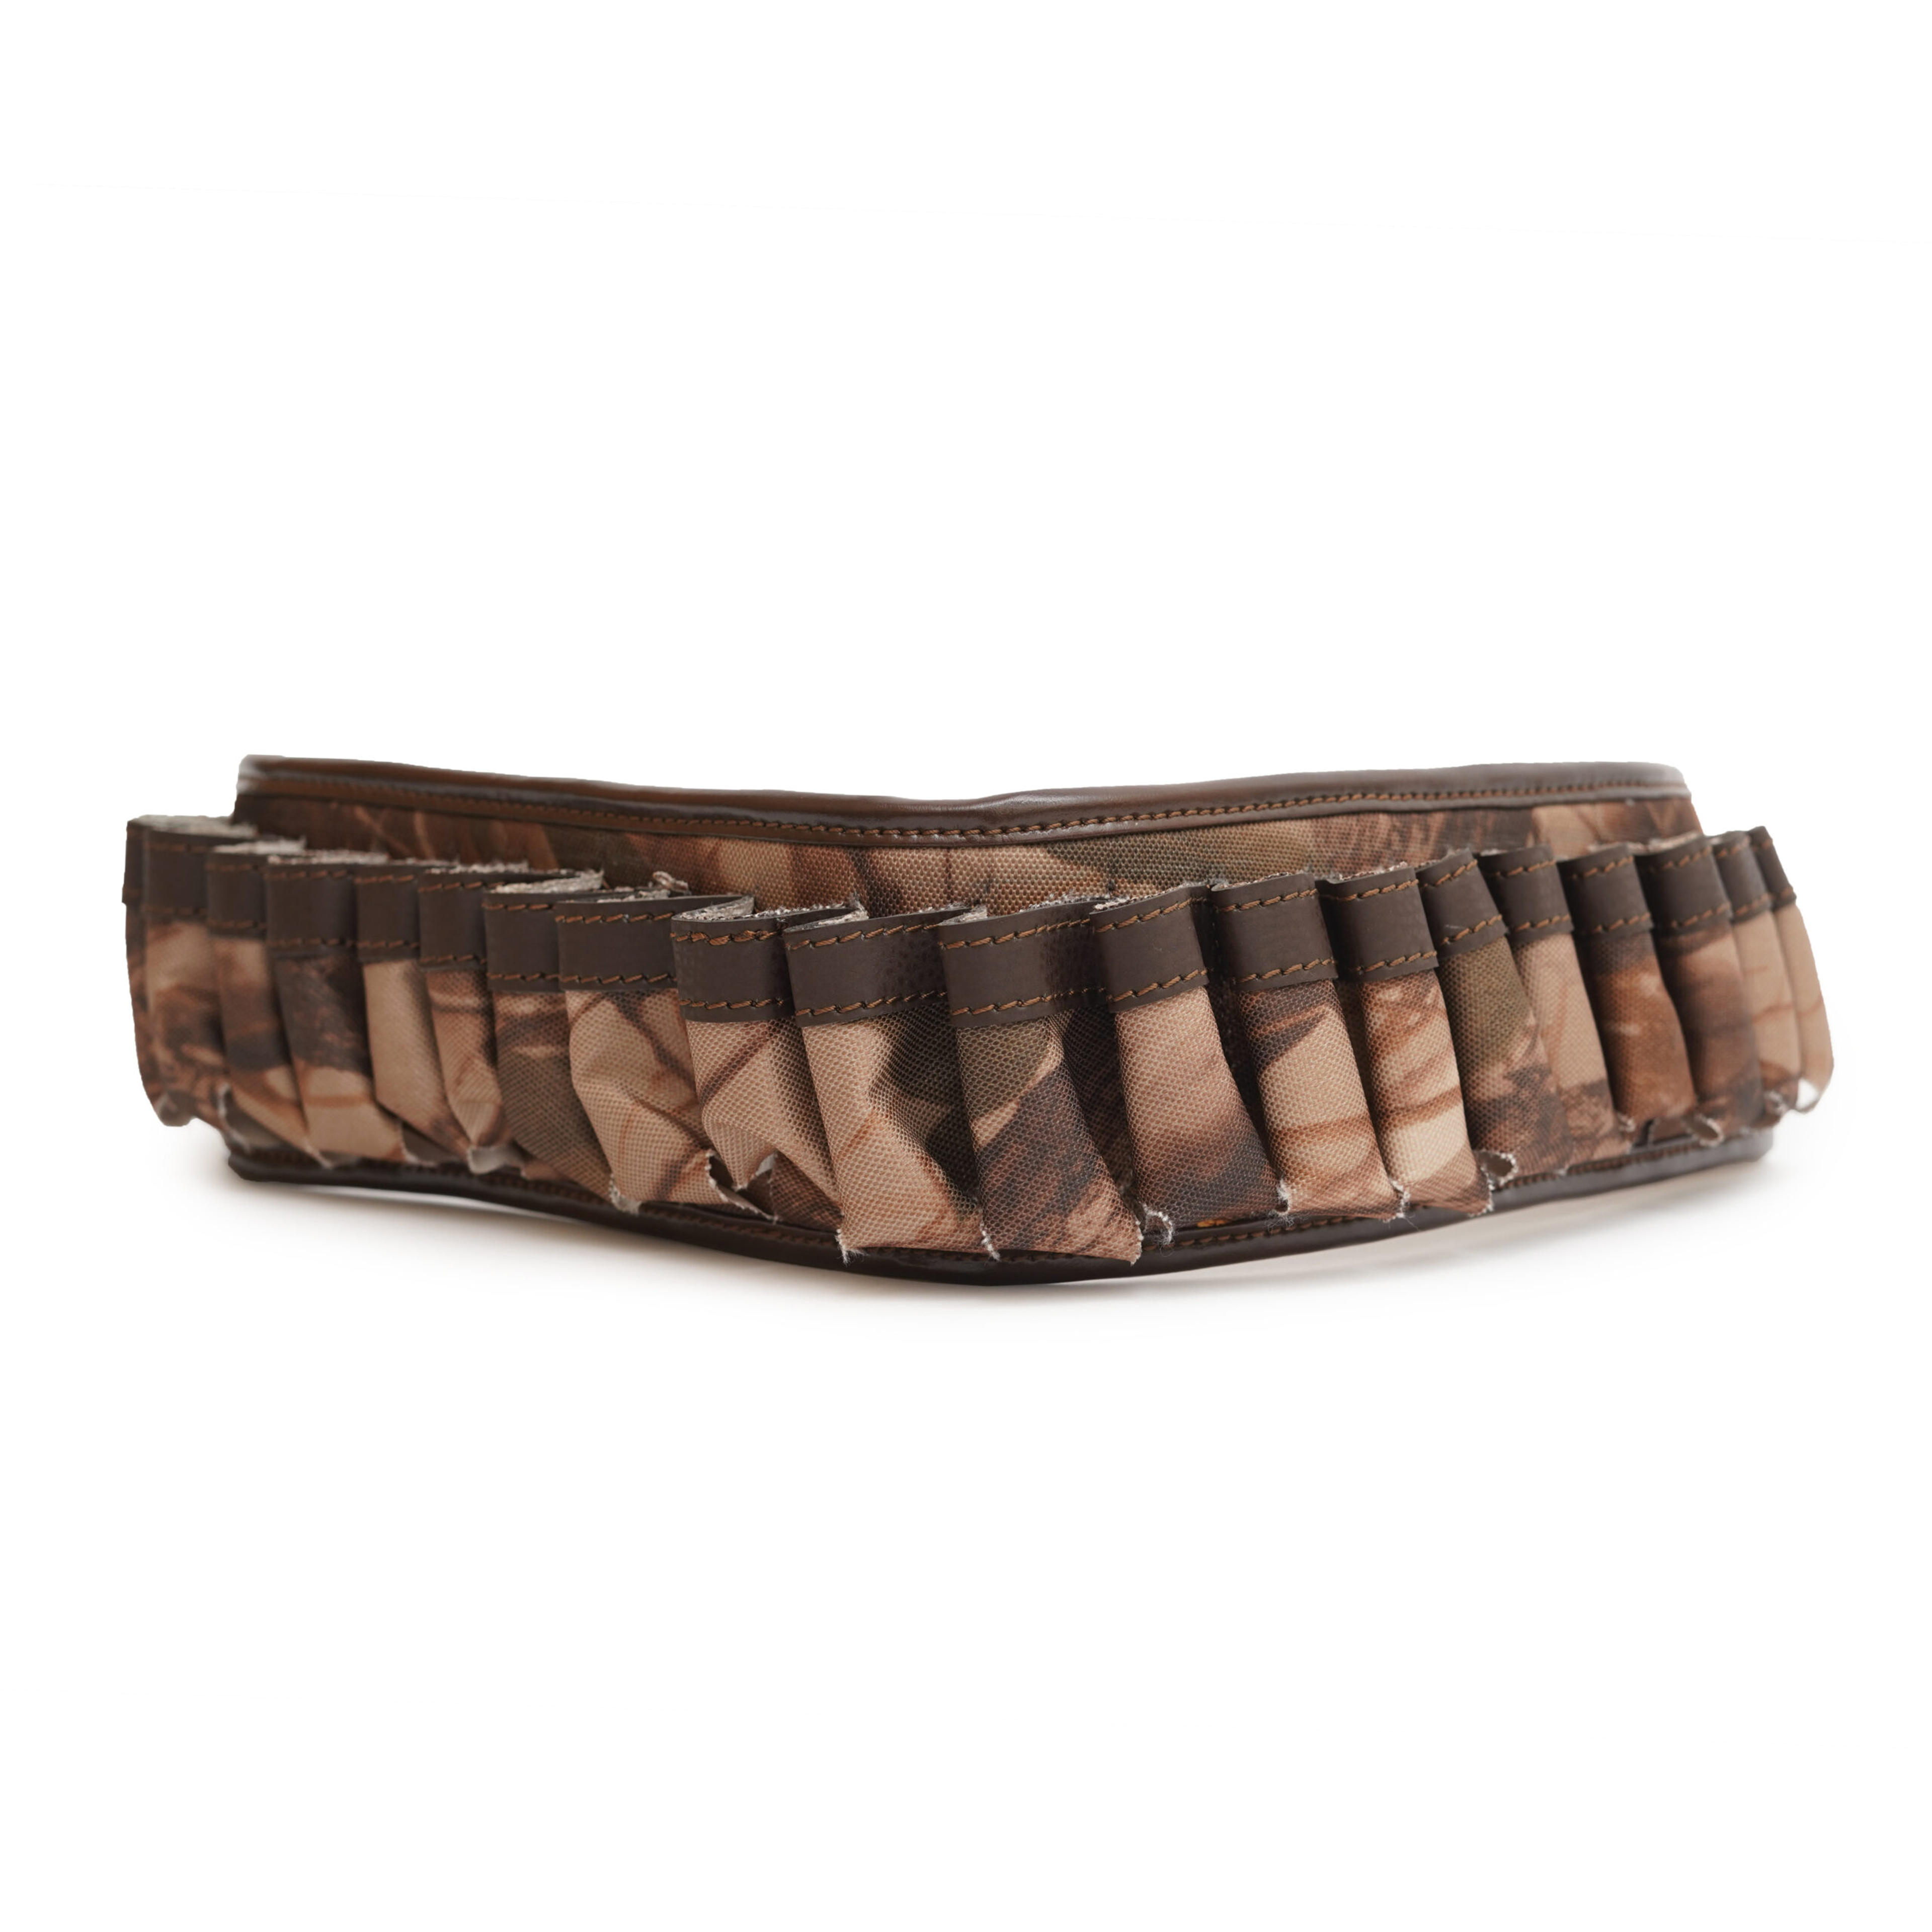 Hunting Leather Canvas Cartridge Belt | Shotgun Shell Holder